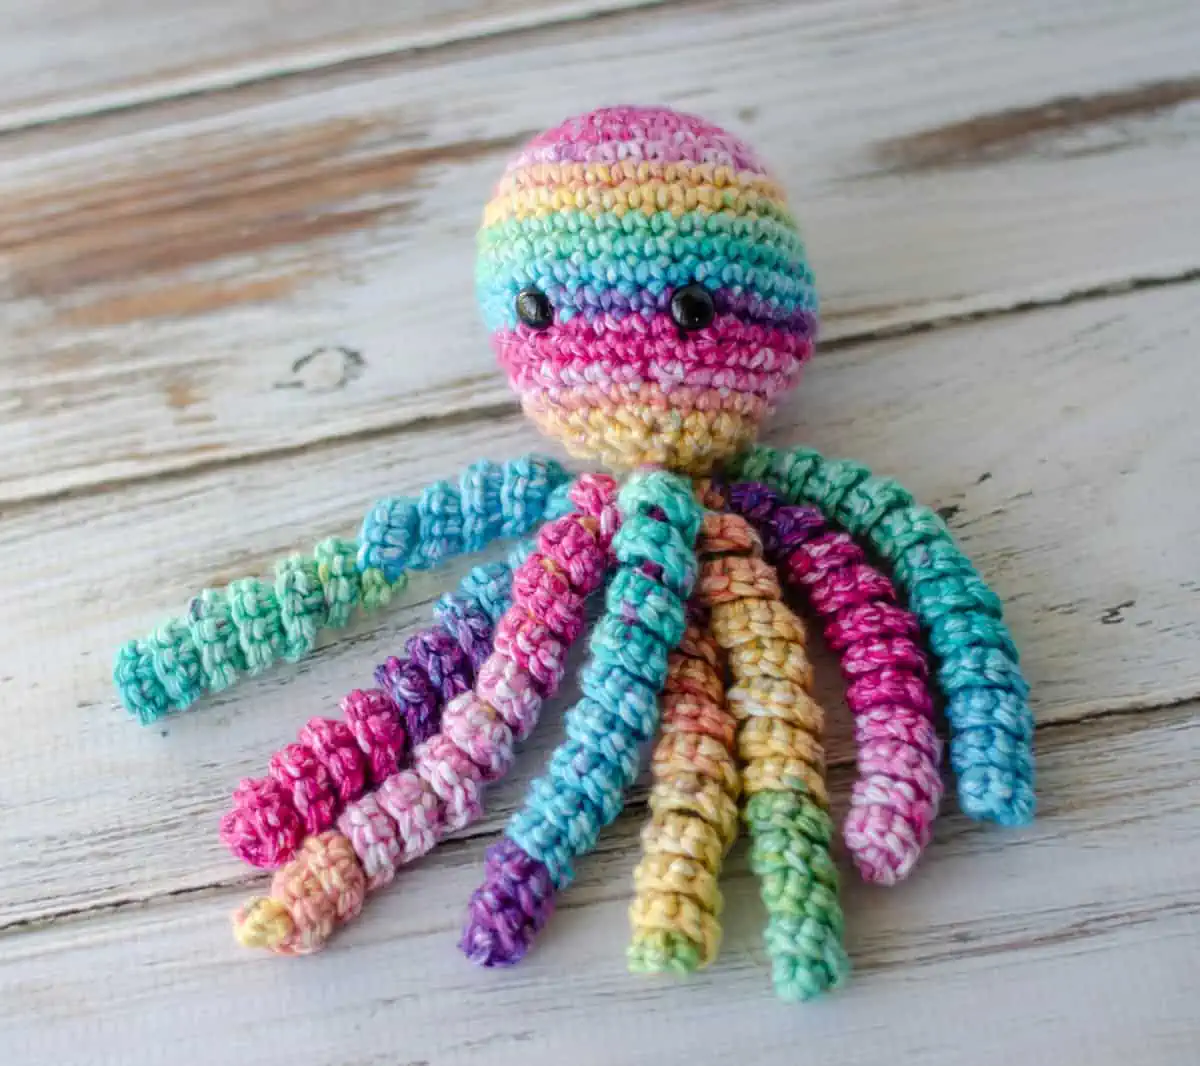 A few animals I made a while ago : r/crochet